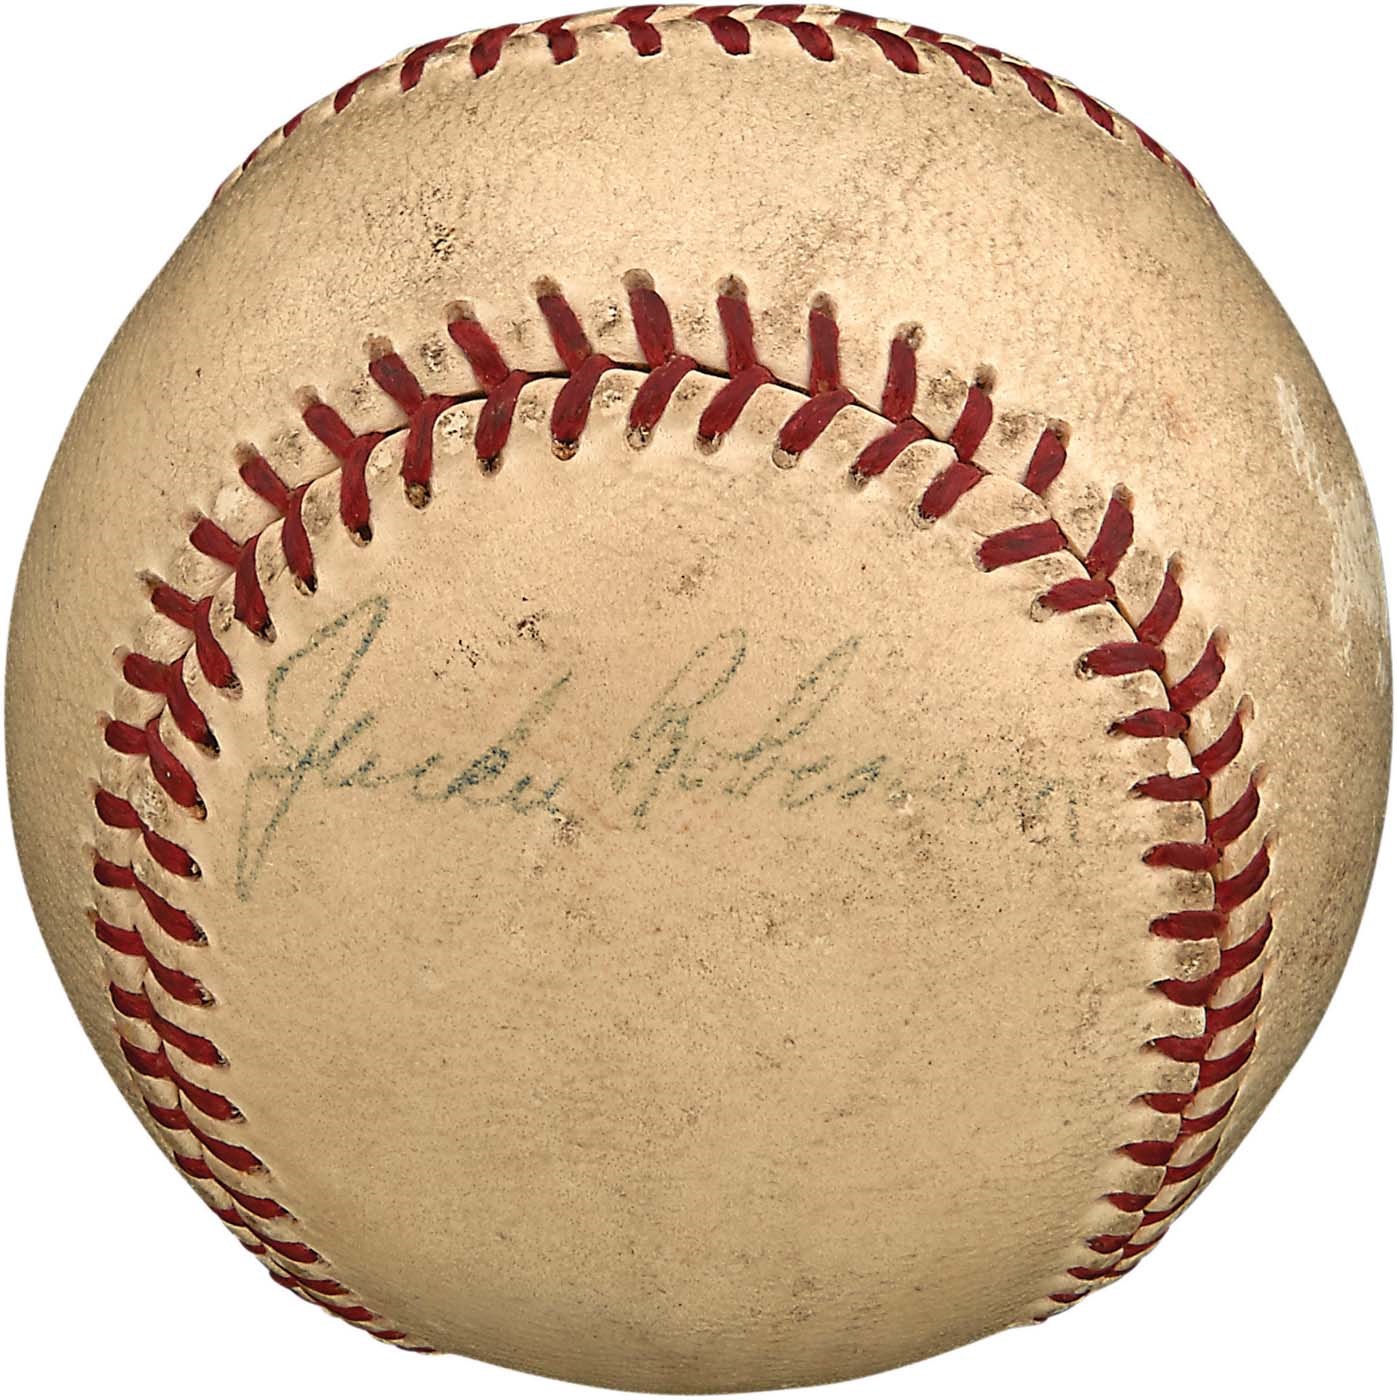 Jackie Robinson & Brooklyn Dodgers - 1950s Jackie Robinson All Stars Signed Baseball (PSA)